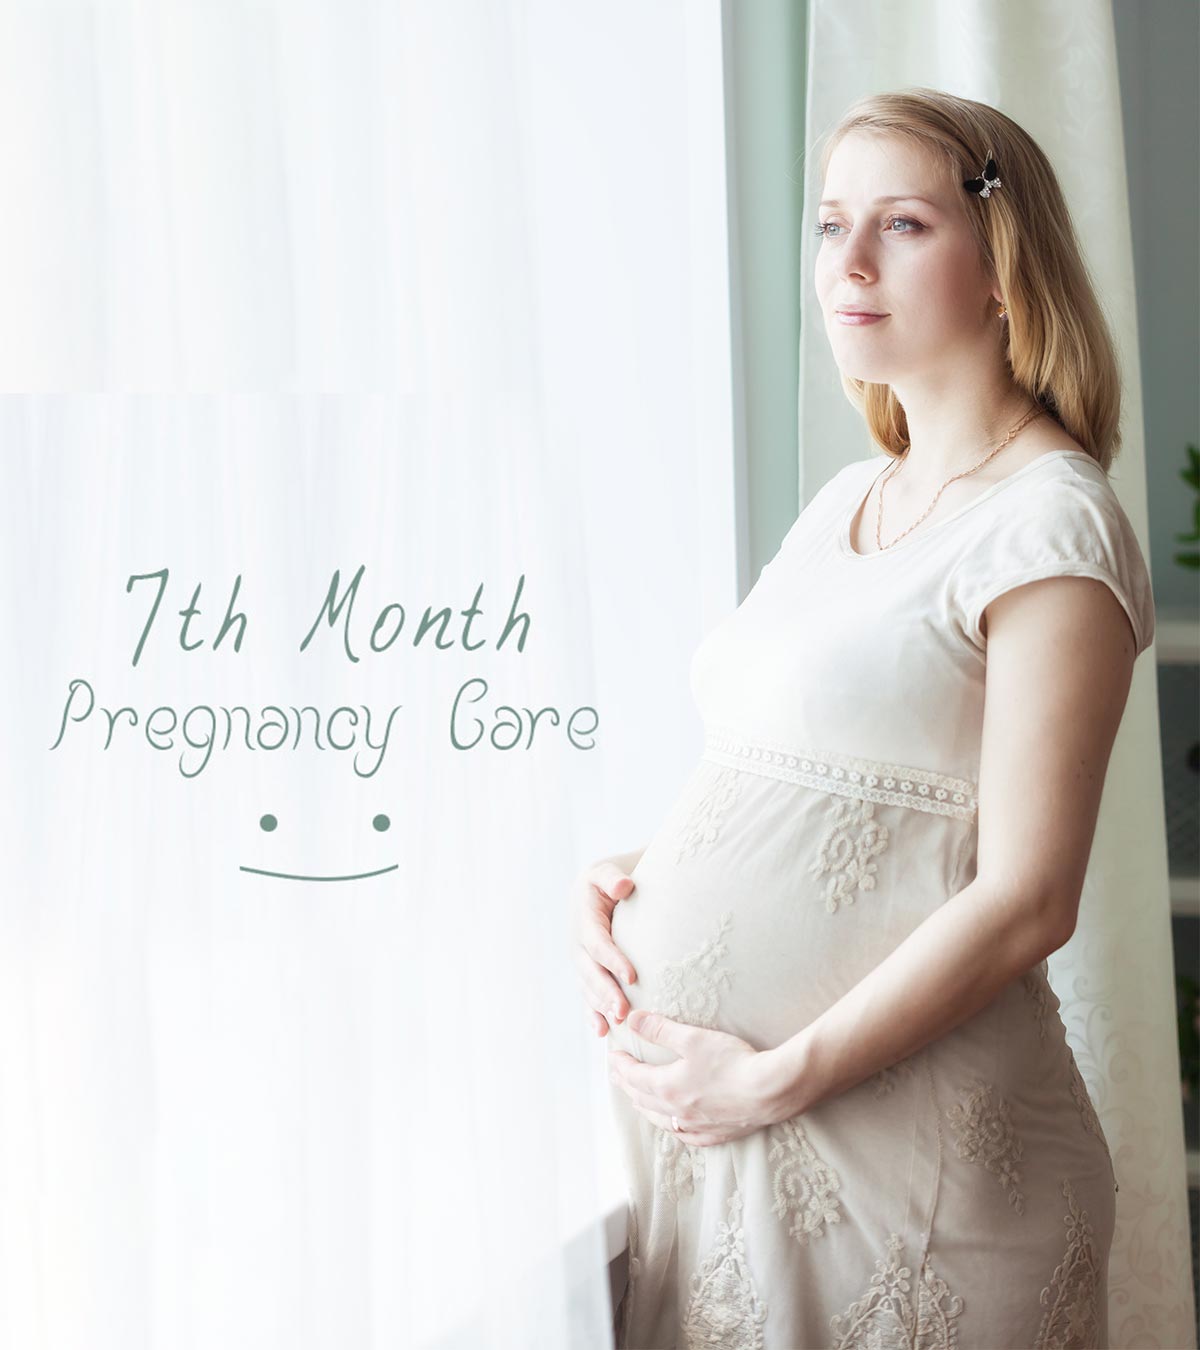 7 Months Pregnant: Symptoms, Body Changes & Baby Development